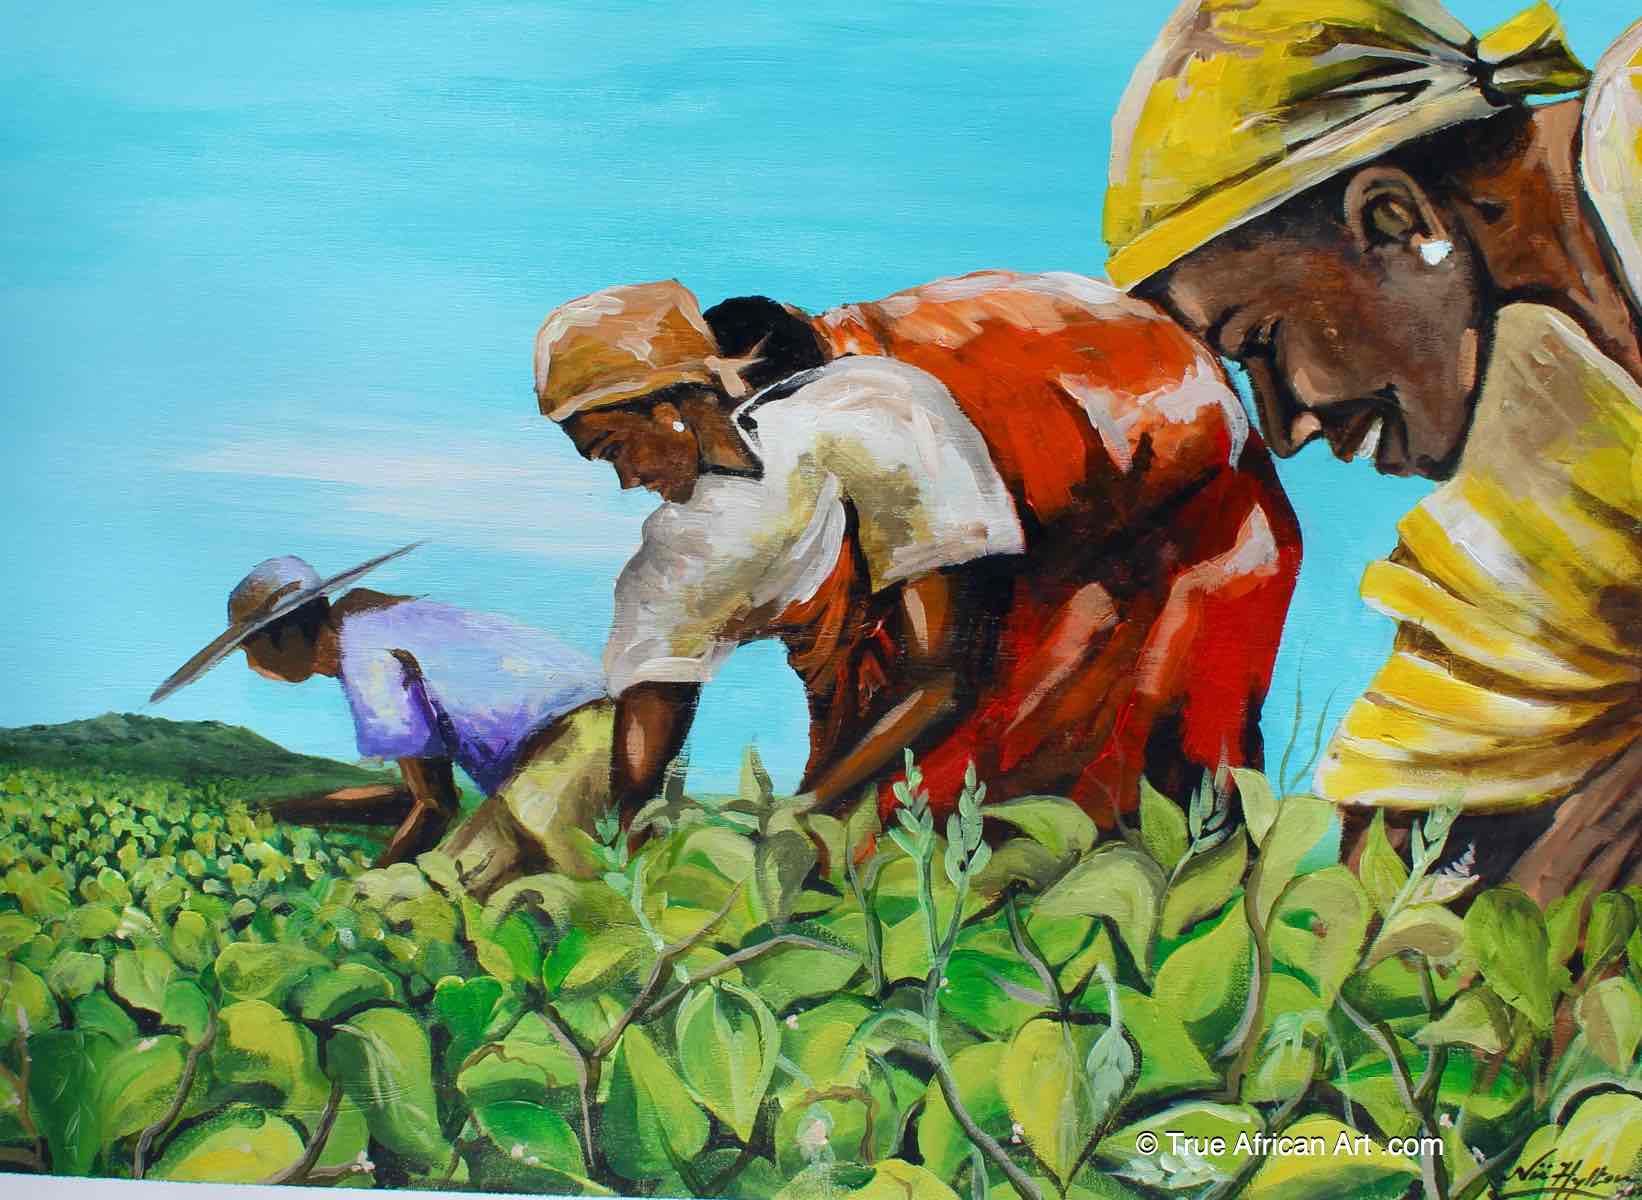 Nii Hylton  |  Ghana  |  "Tea Leaves"  |  Original  |  True African Art .com